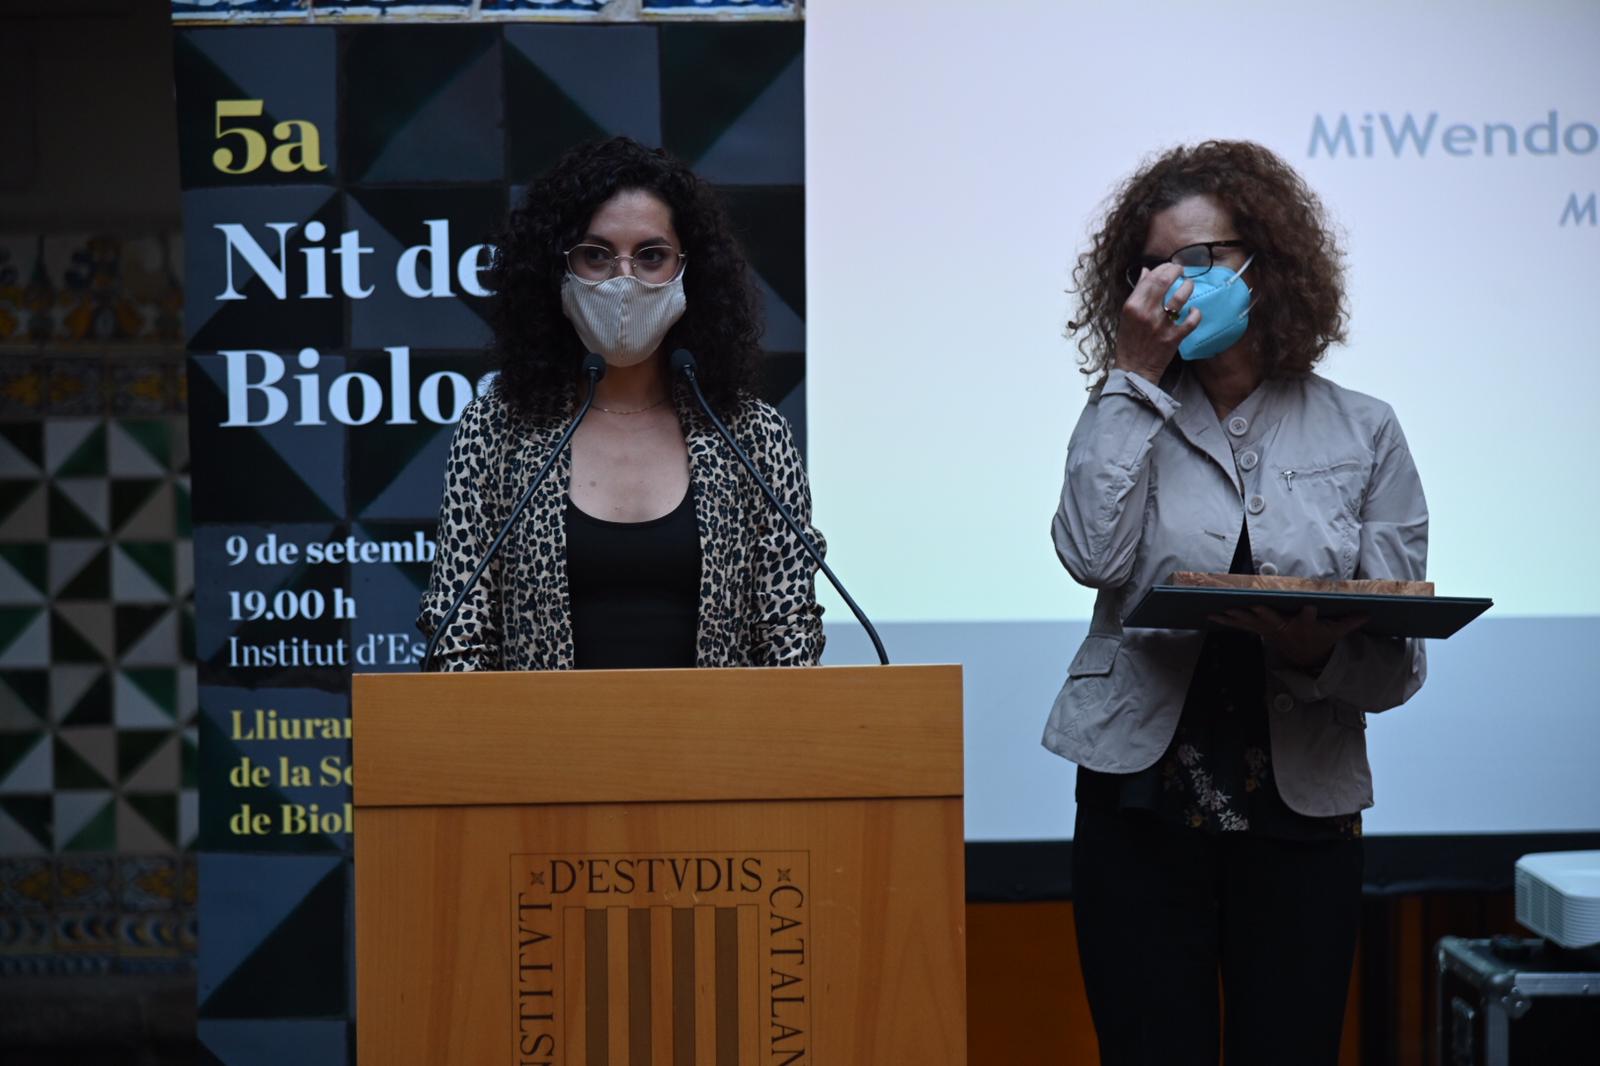 MiWEndo Solutions has won the Societat Catalana de Biologia Start-Up 2020 Award